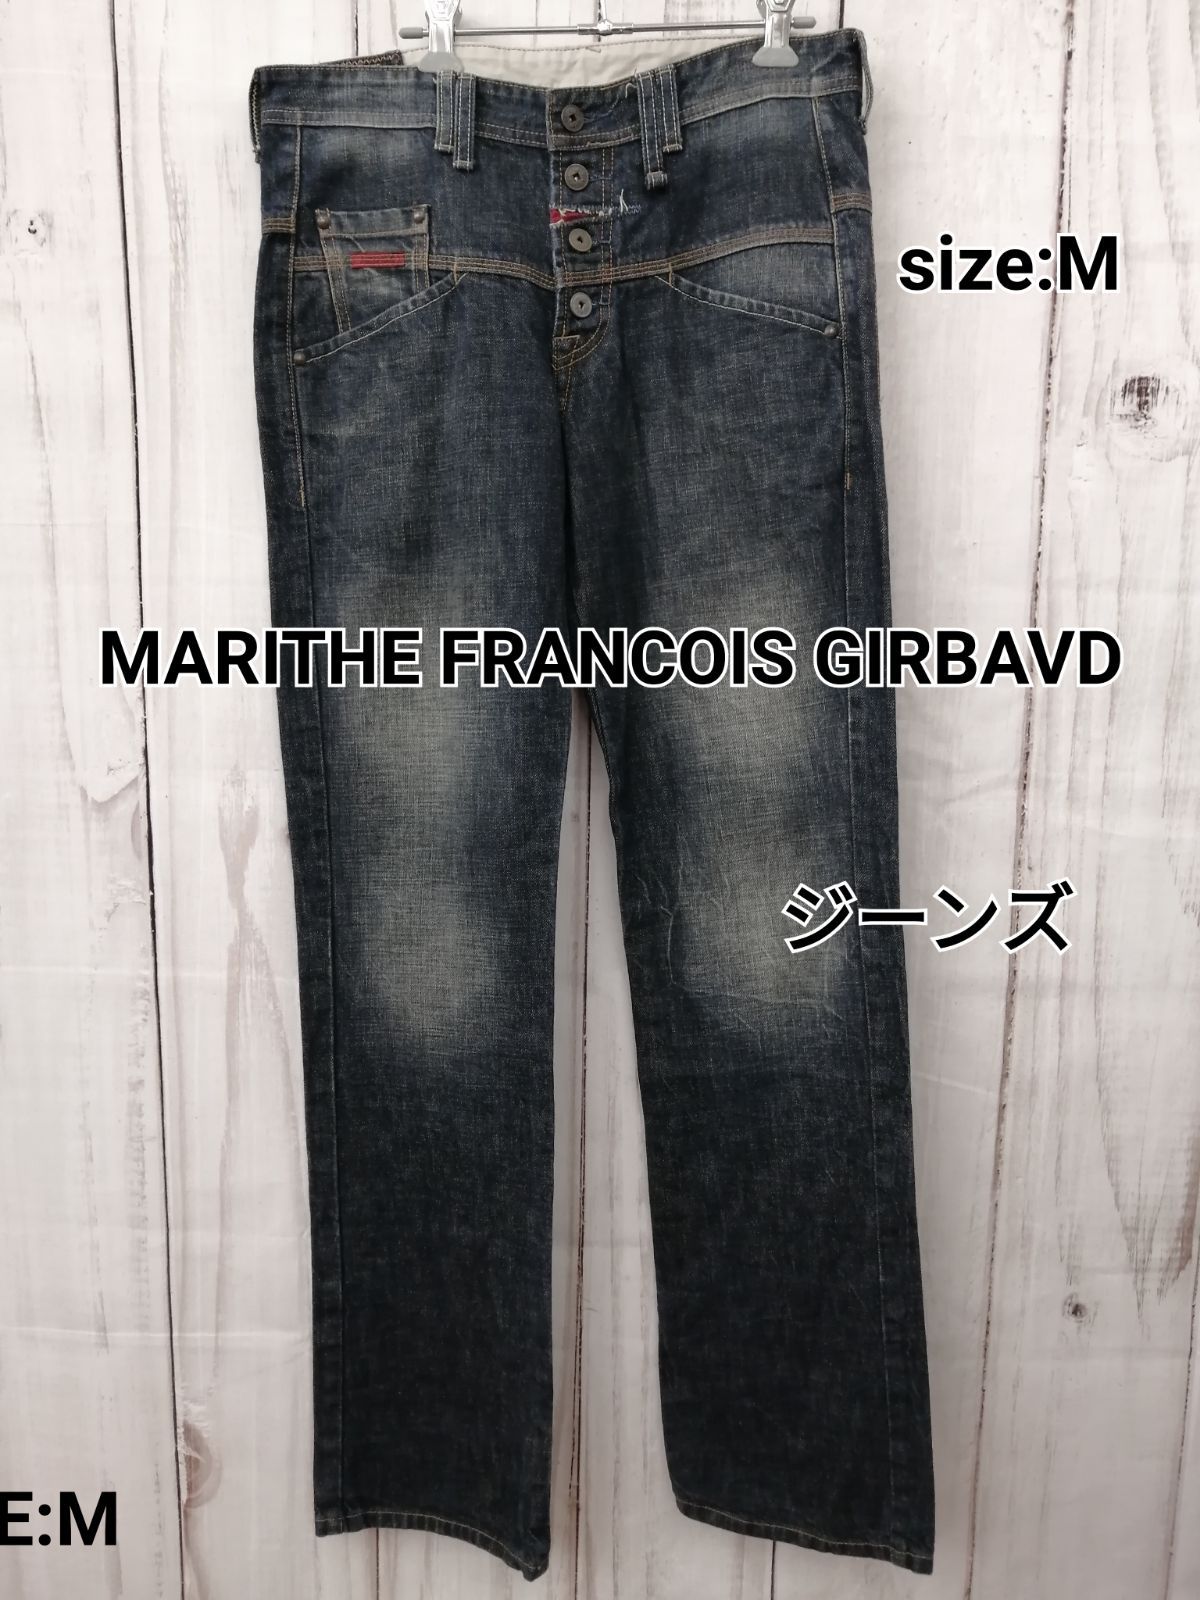 Marithe Francois Girbaud jeans sizeMmxxshop